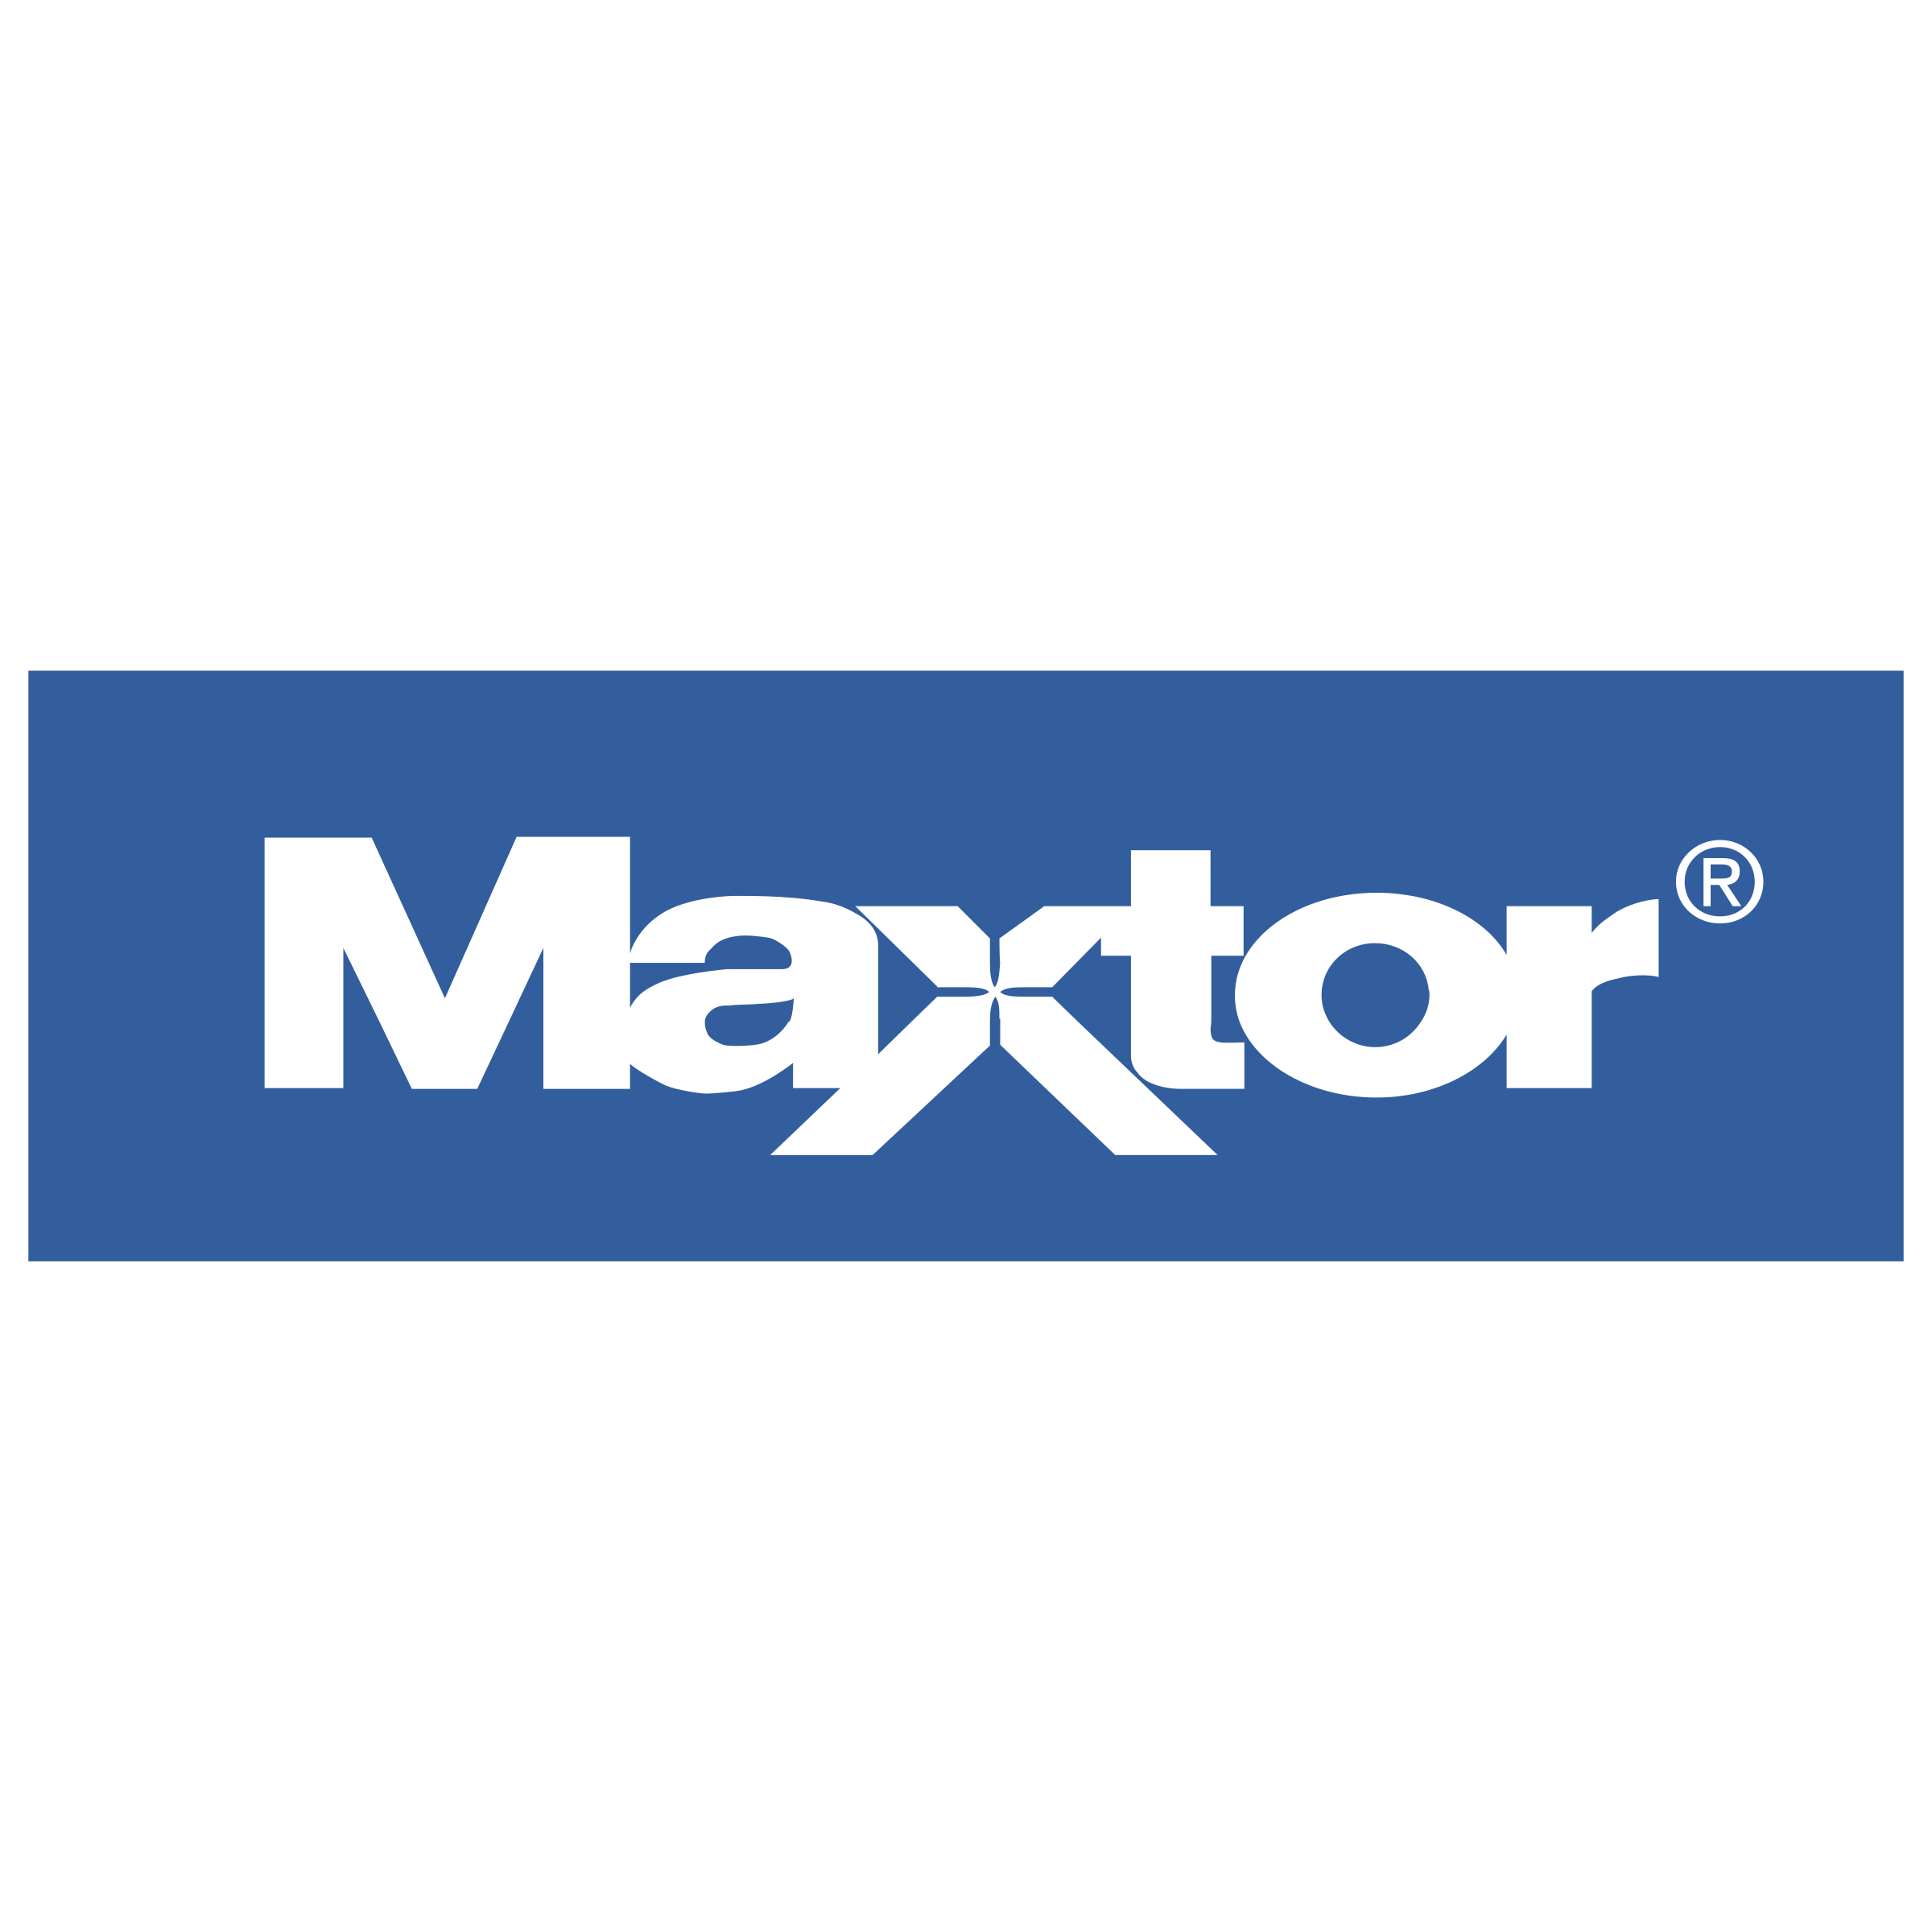 Maxtor Logo - Maxtor Logo PNG Transparent & SVG Vector